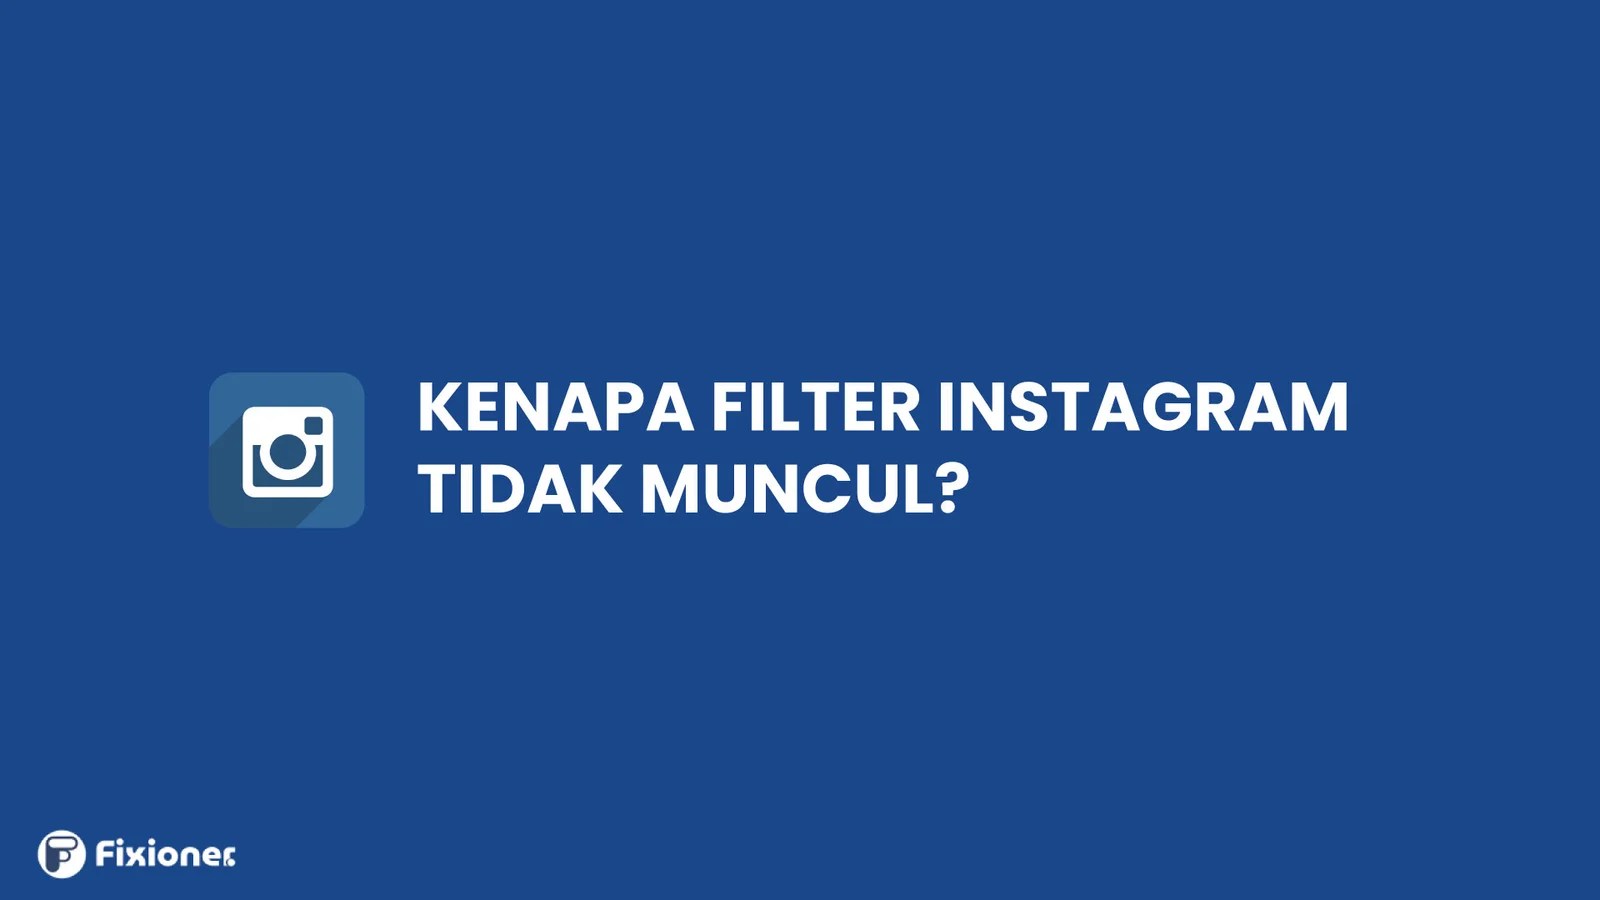 Kenapa Filter Instagram Tidak Muncul Padahal Sudah Di Upgrade. Kenapa Filter Instagram Tidak Muncul? Penyebab dan Cara Mengatasinya